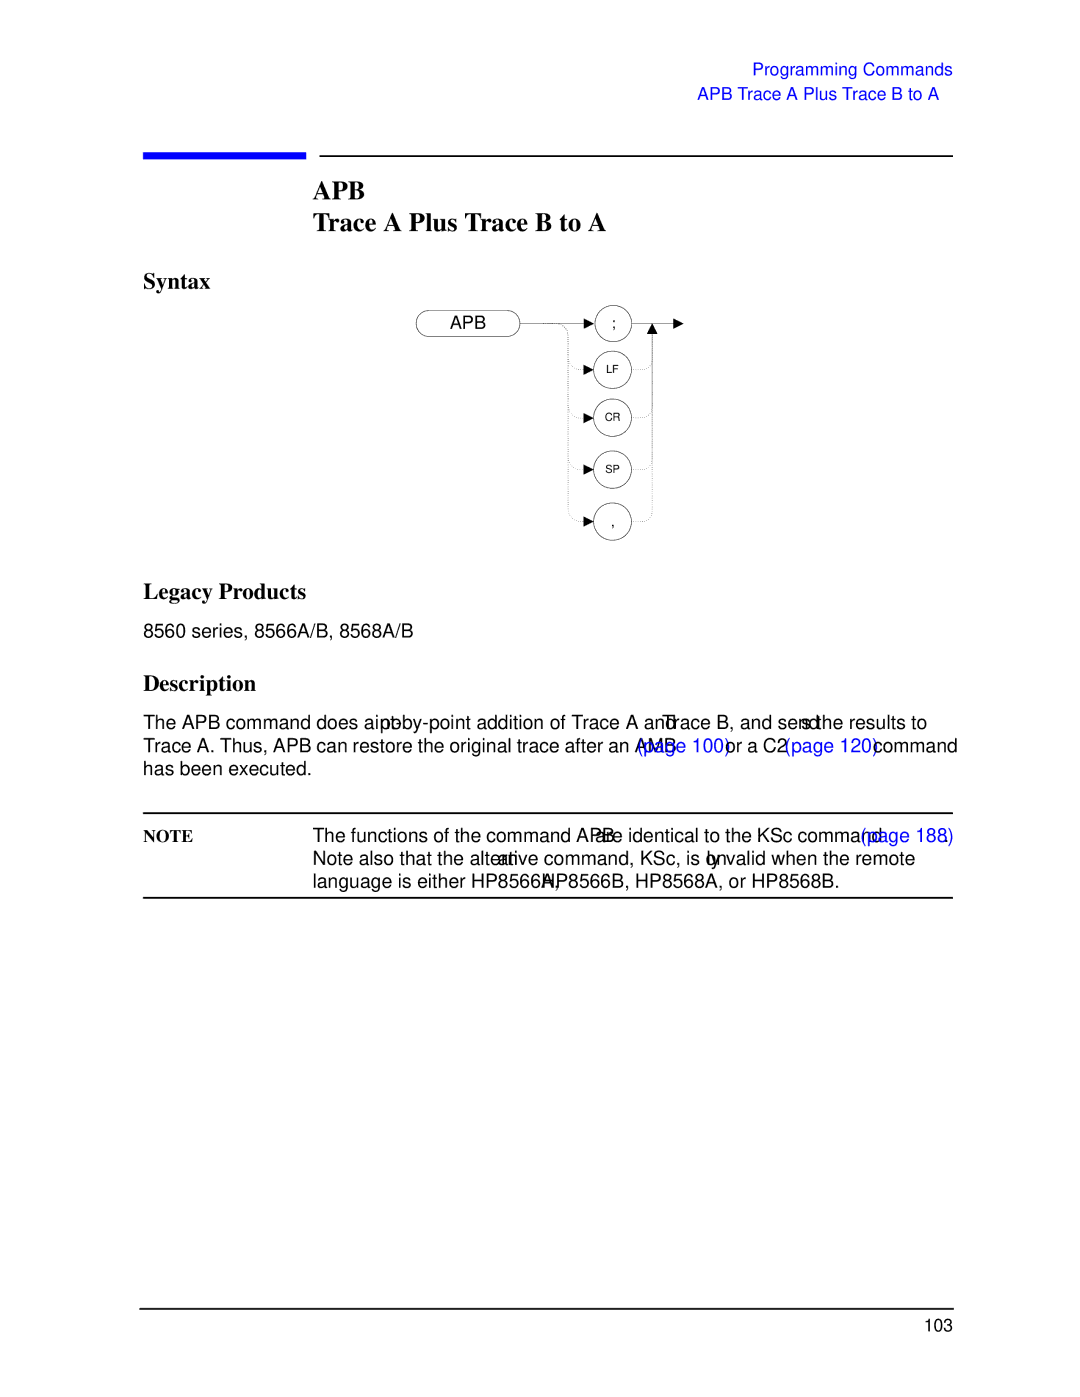 Agilent Technologies N9030a manual Apb, Trace a Plus Trace B to a 